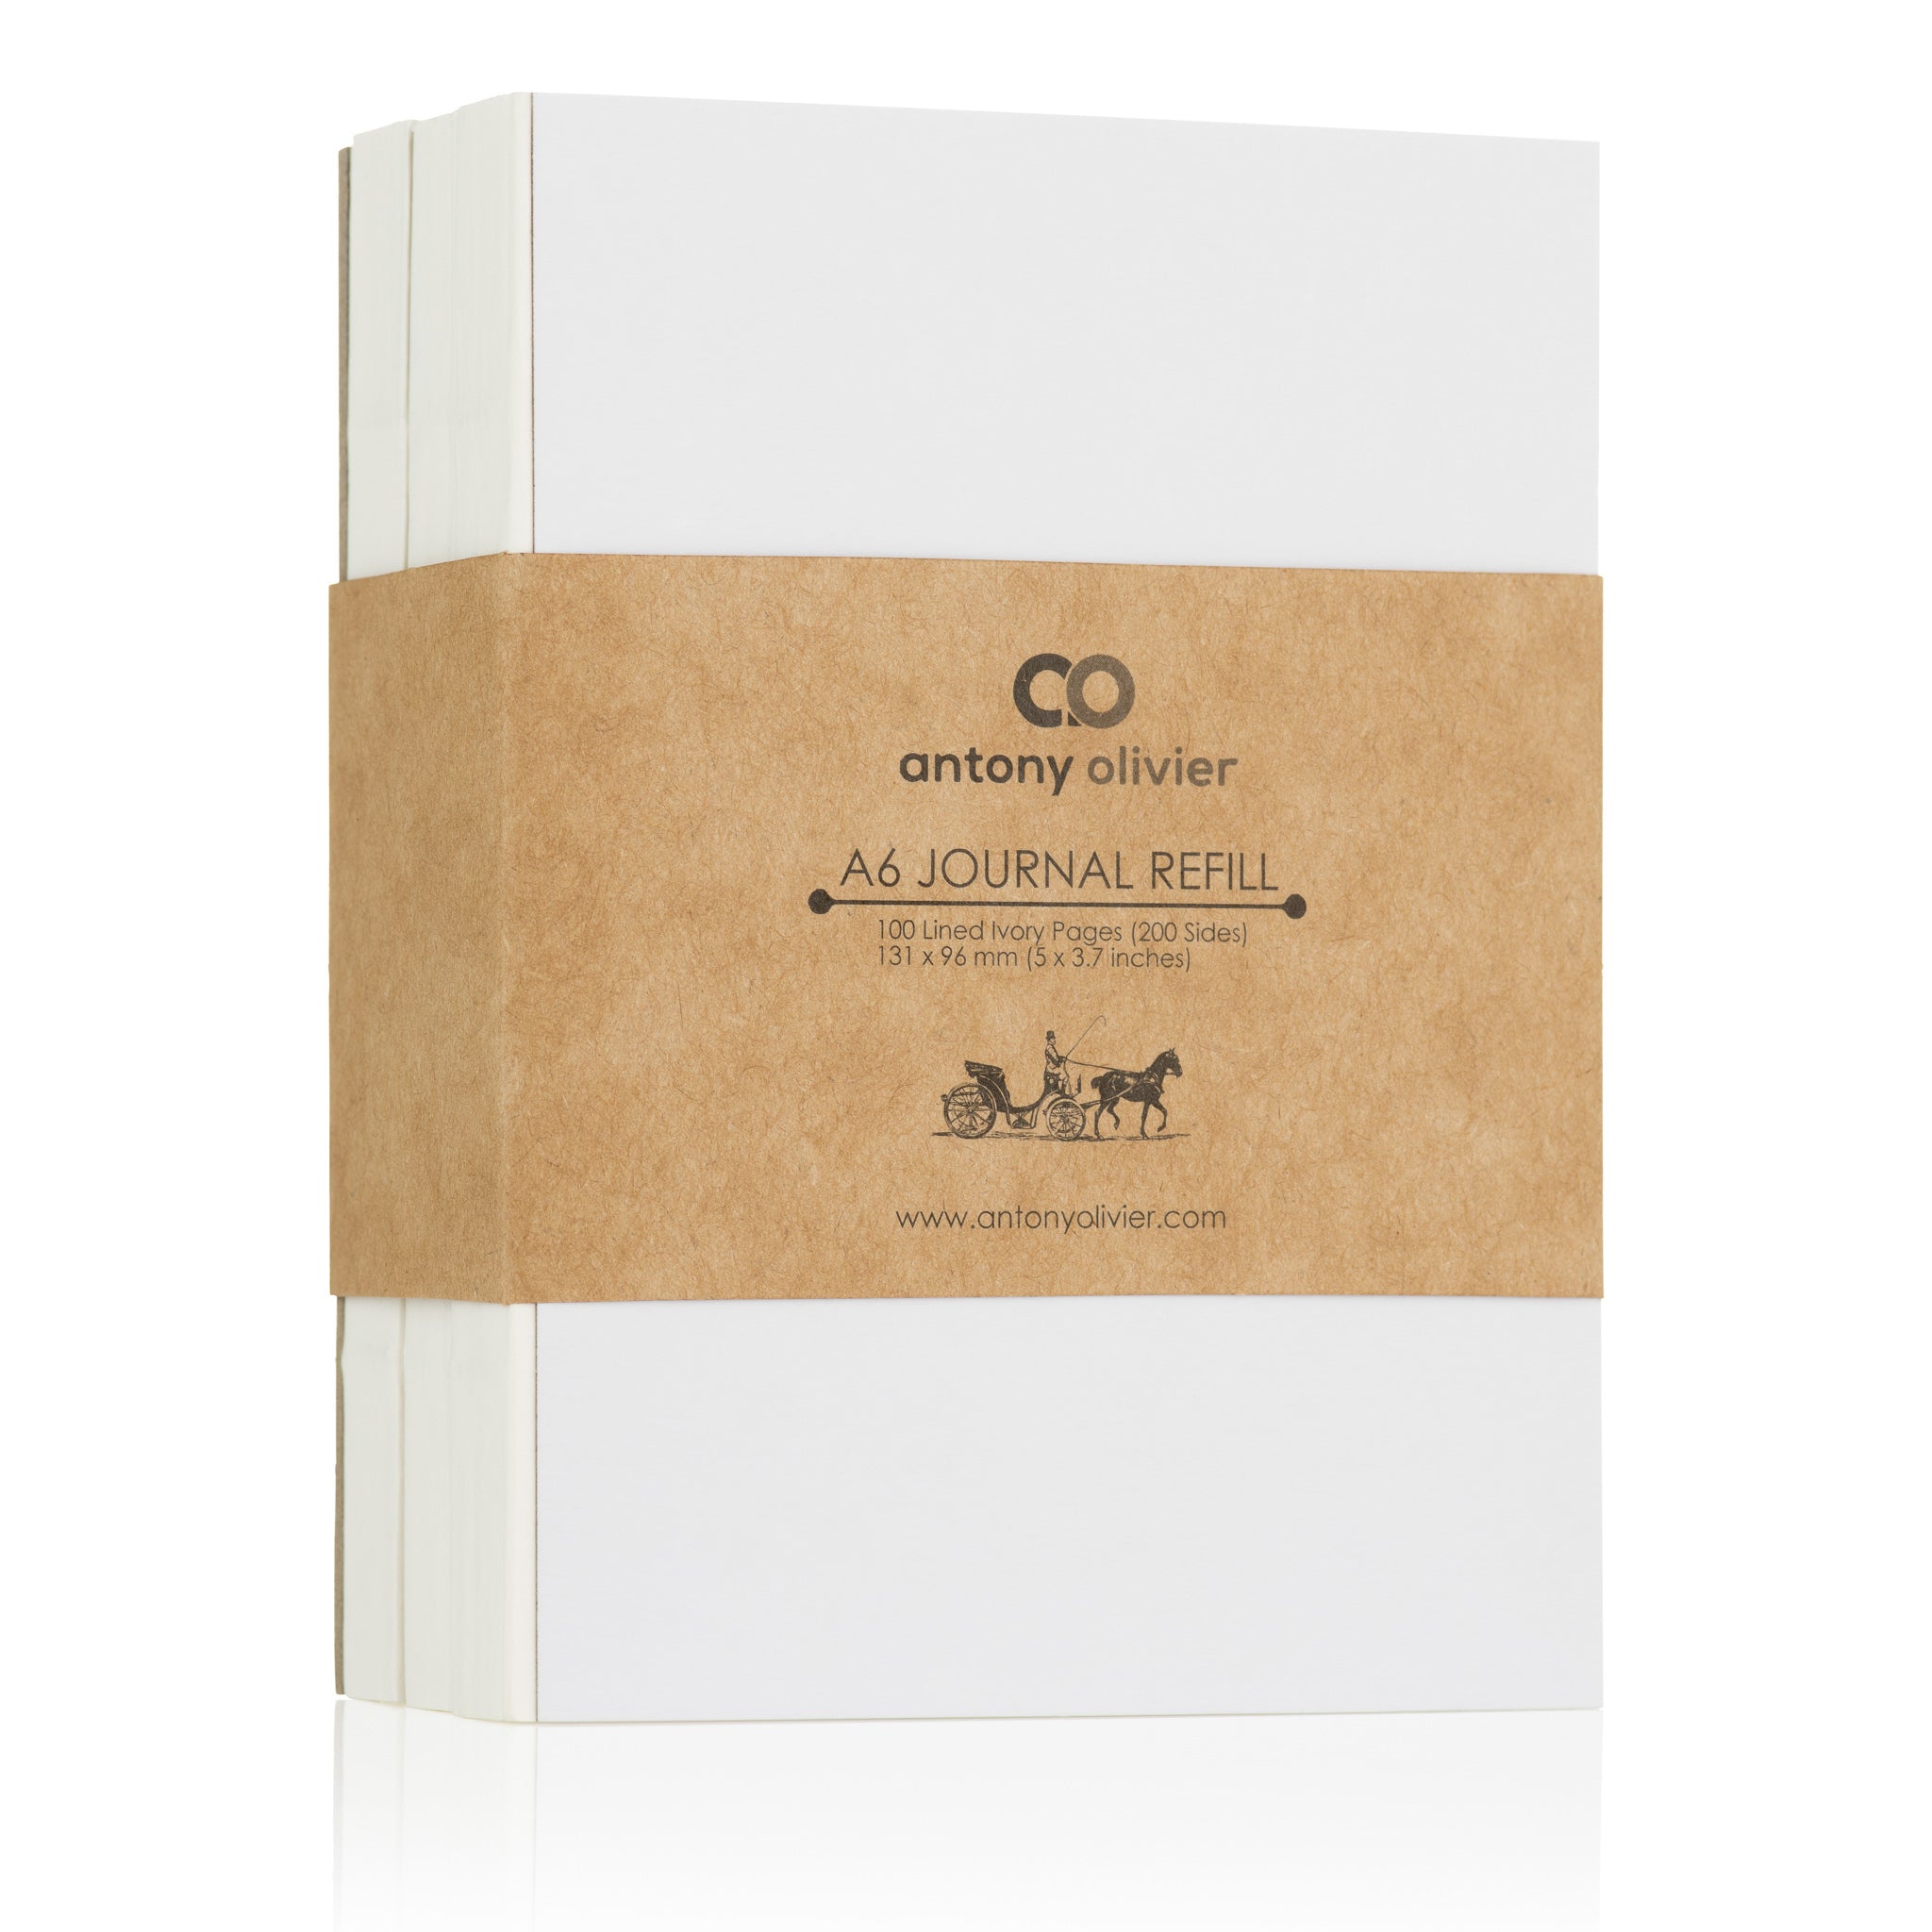 A5 Plain Paper Refill 2-Pack - AntonyOlivier